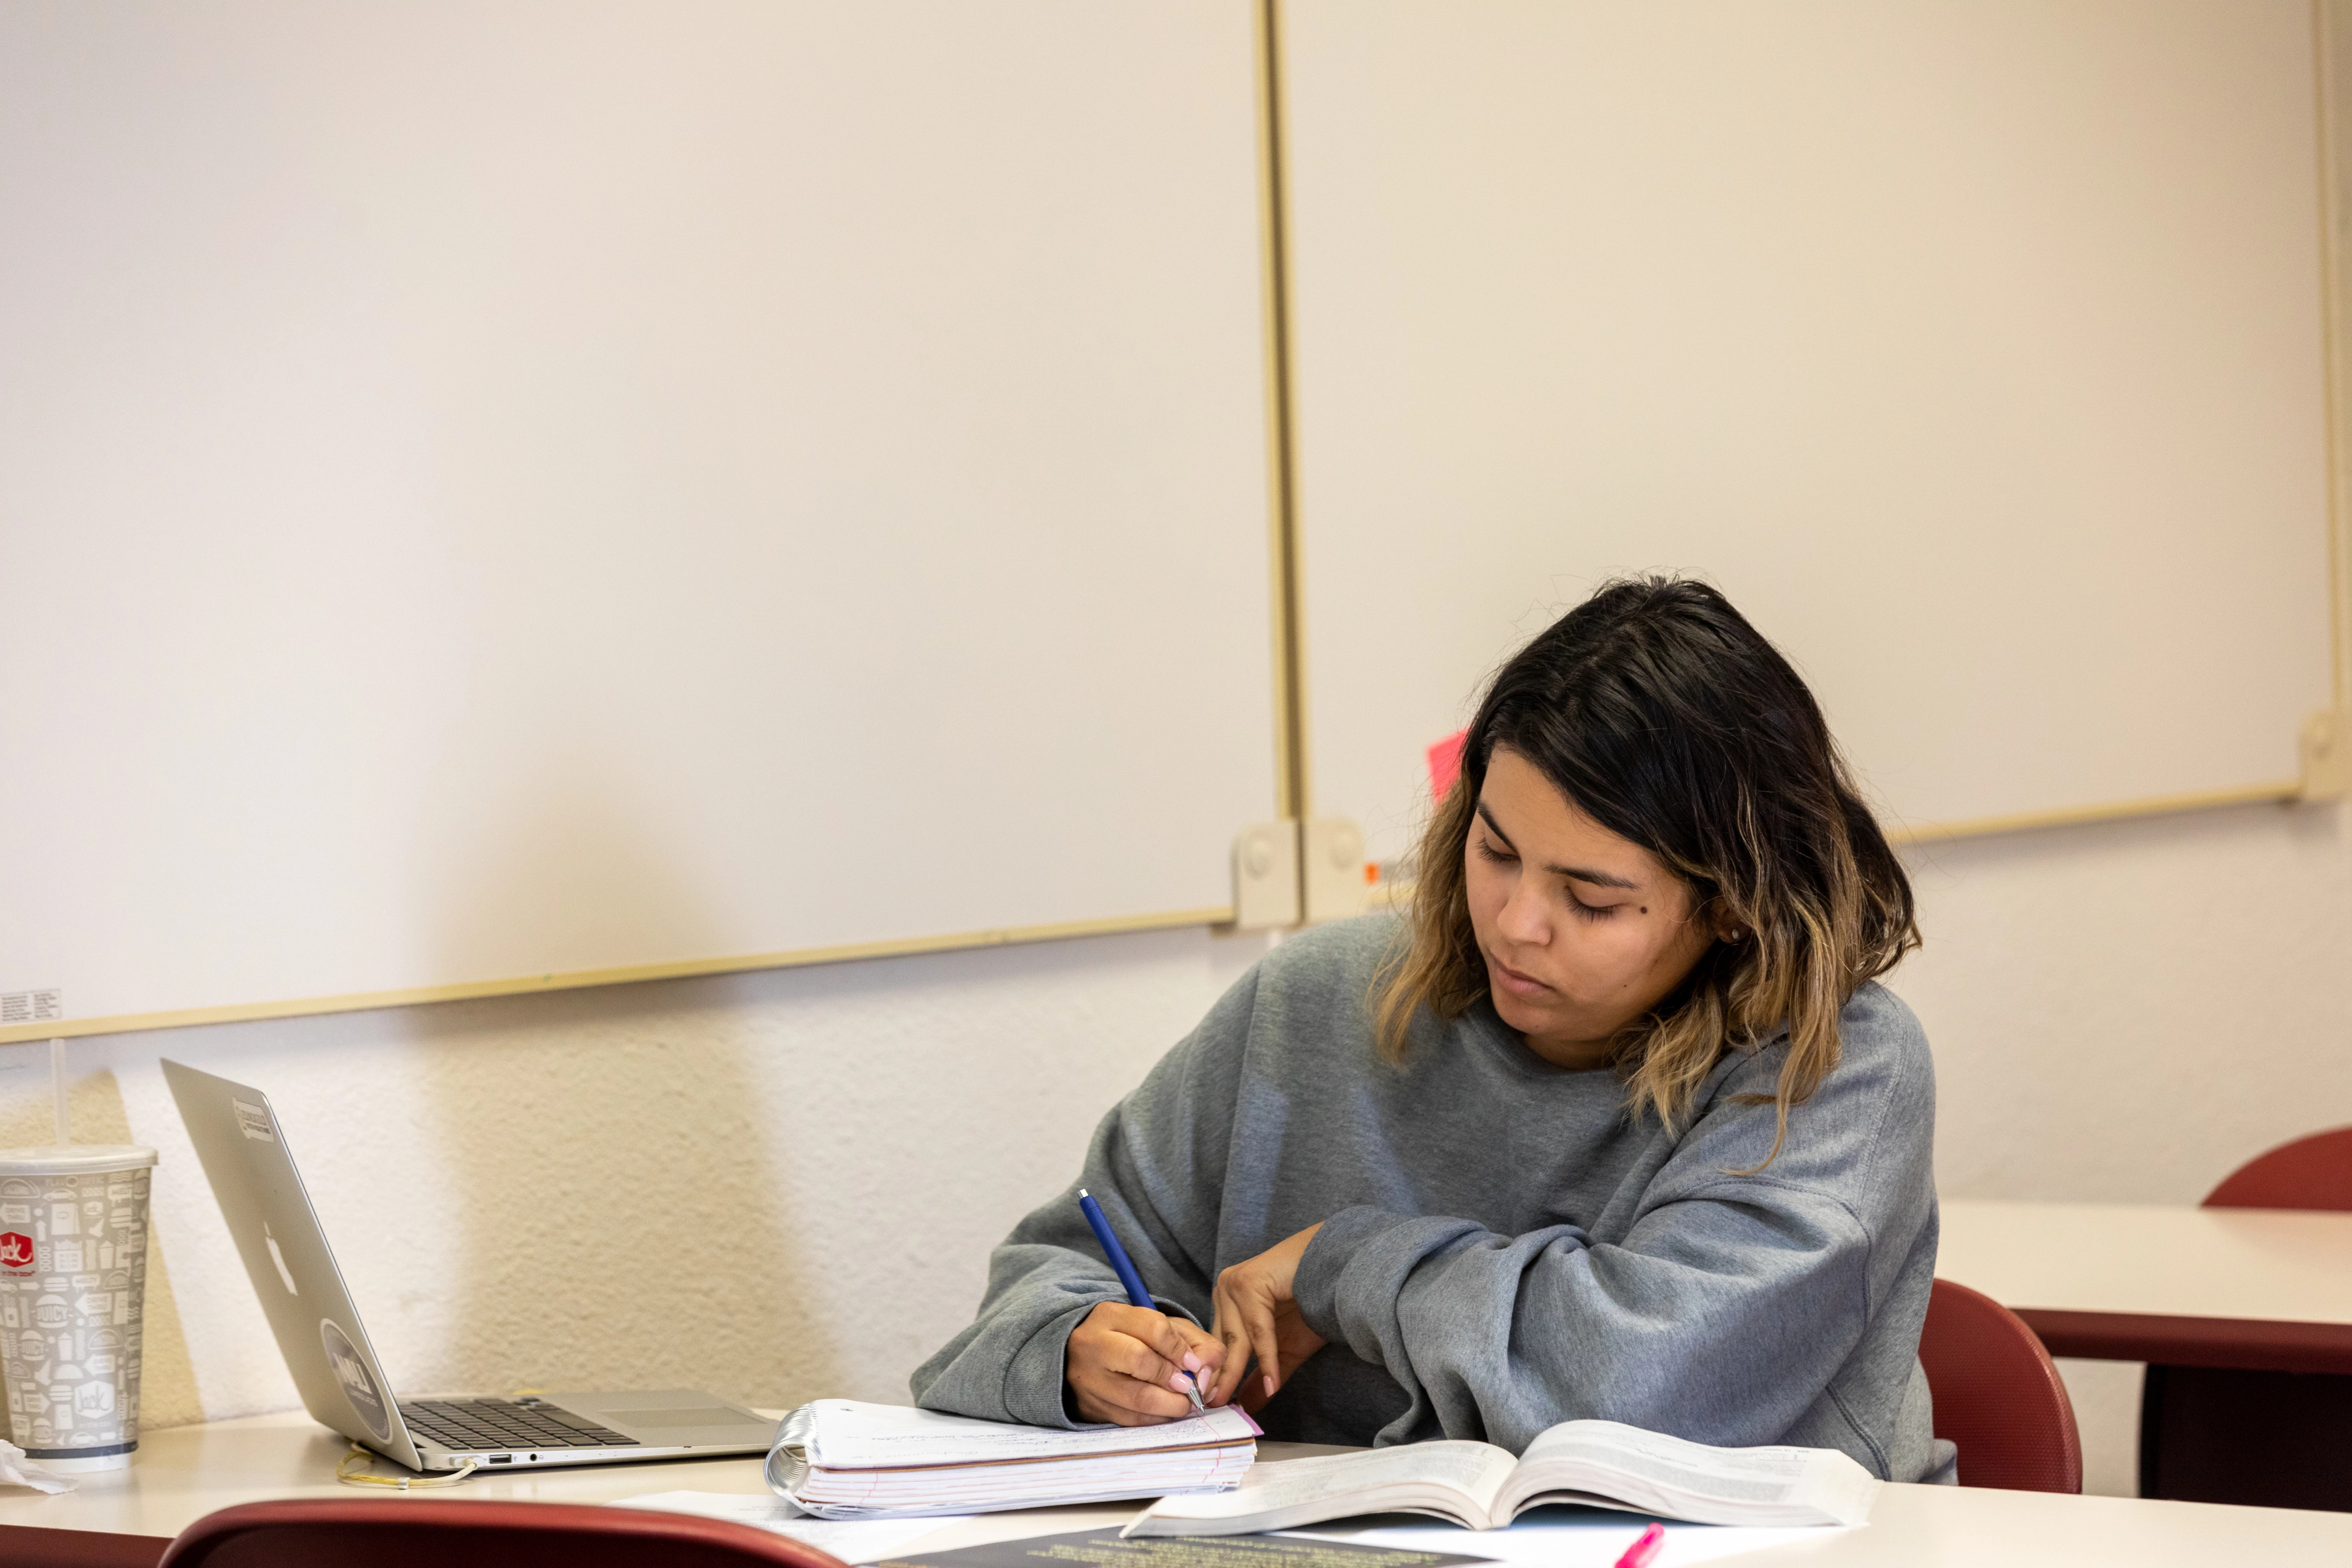 A student studying in a NAU–Yuma classroom